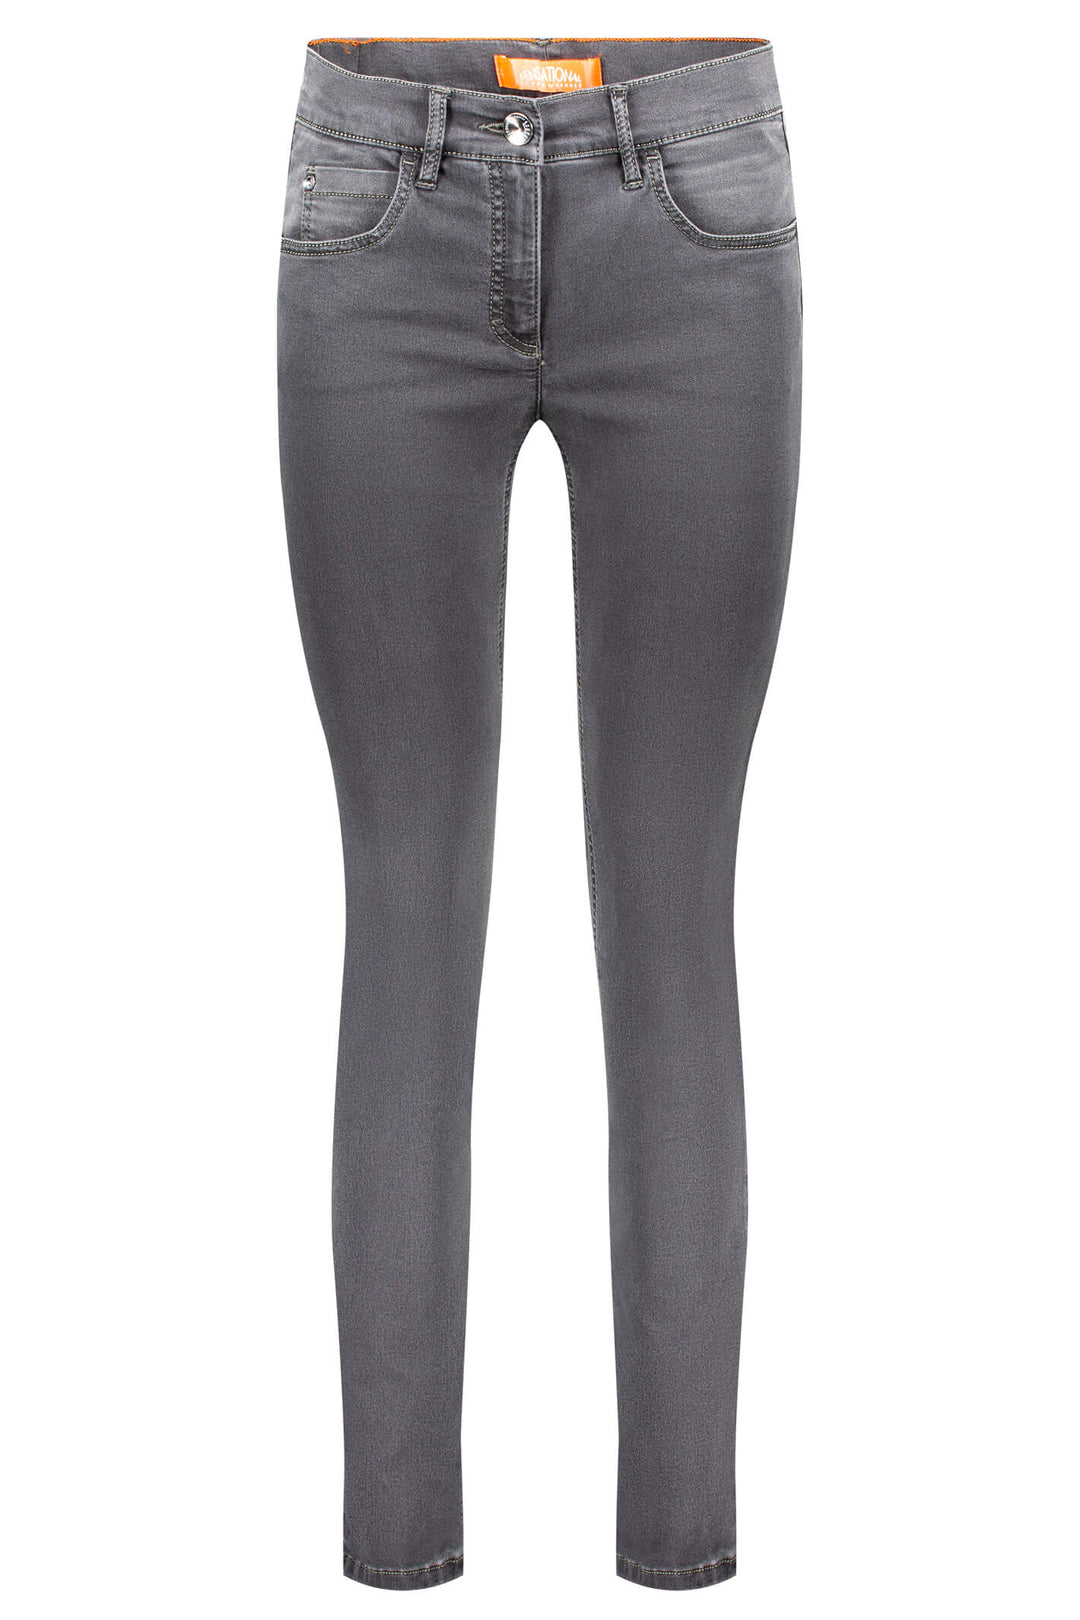 Zerres Twigy 4005-560 98 Grey Slim Fit Super Stretch Jeans - Shirley Allum Boutique